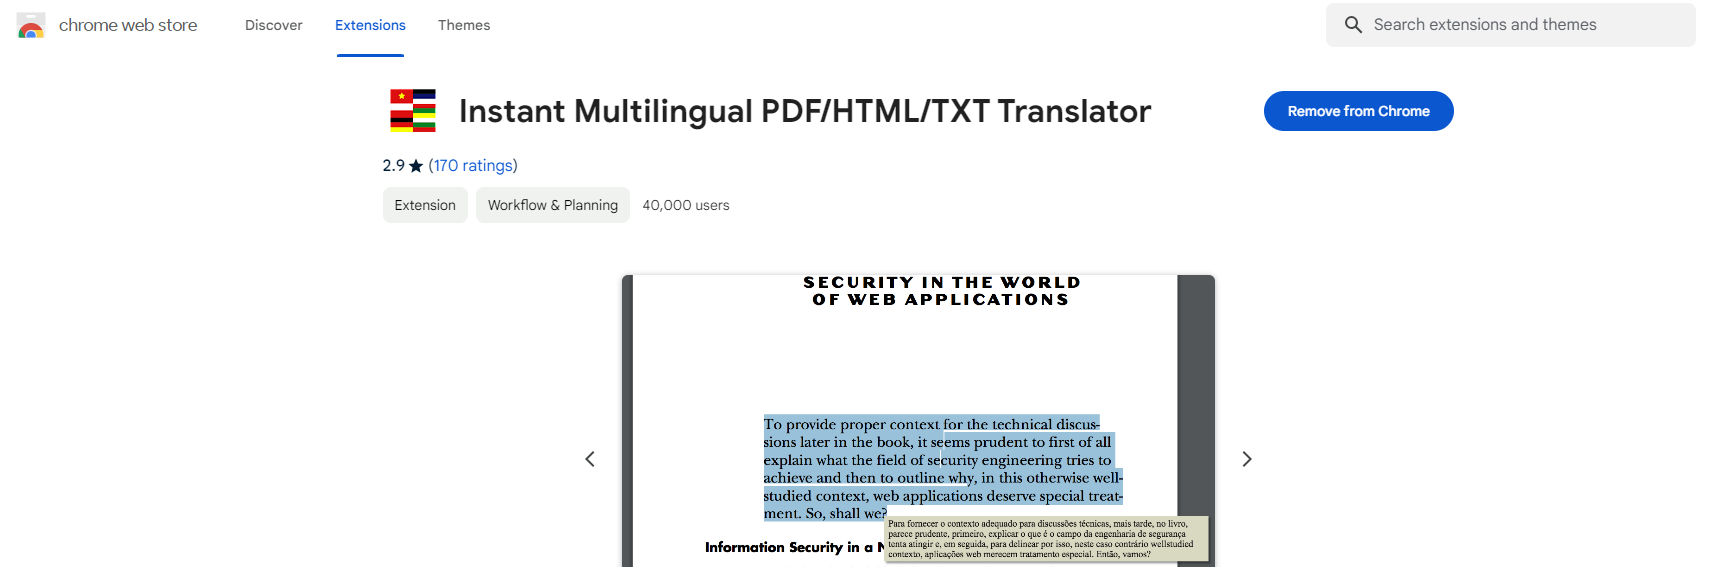 Telugu to Hindi translation PDF using Chrome translator extension